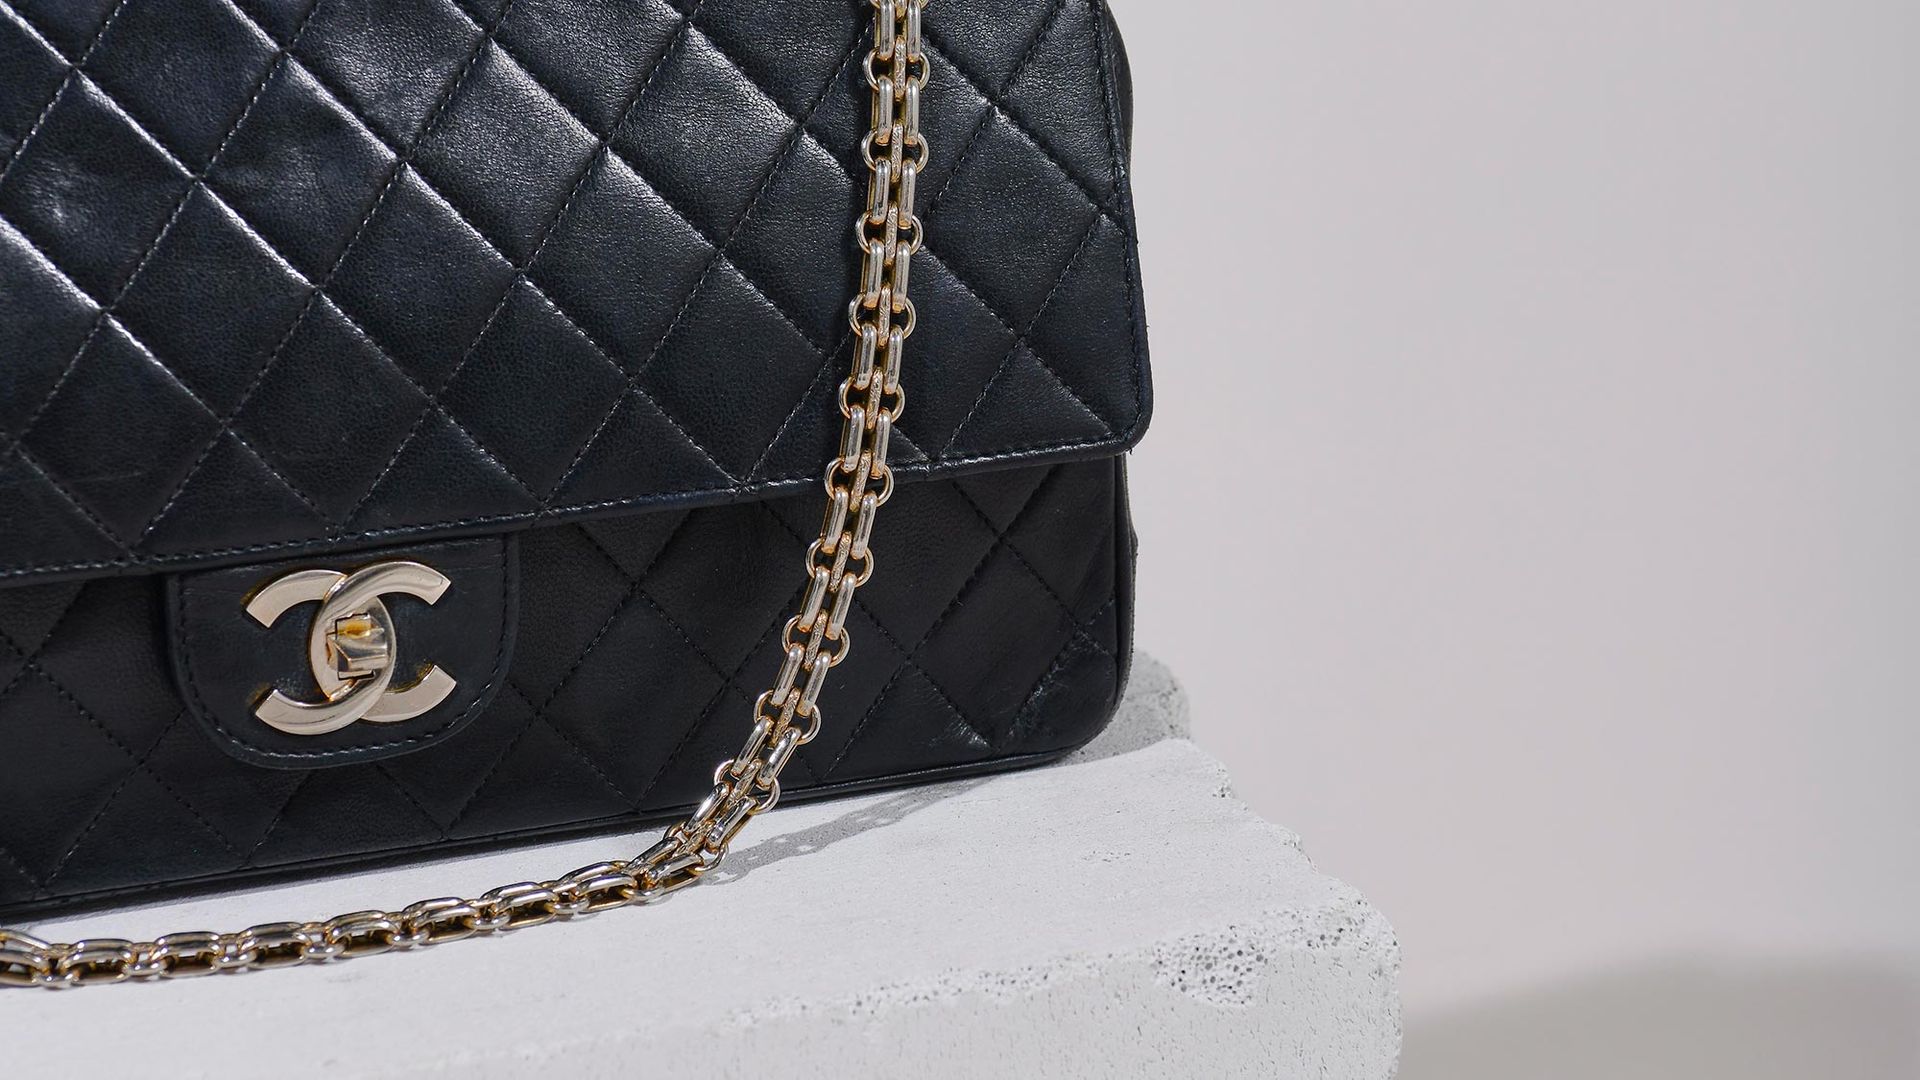 These designer handbags are still increasing in value despite the ...